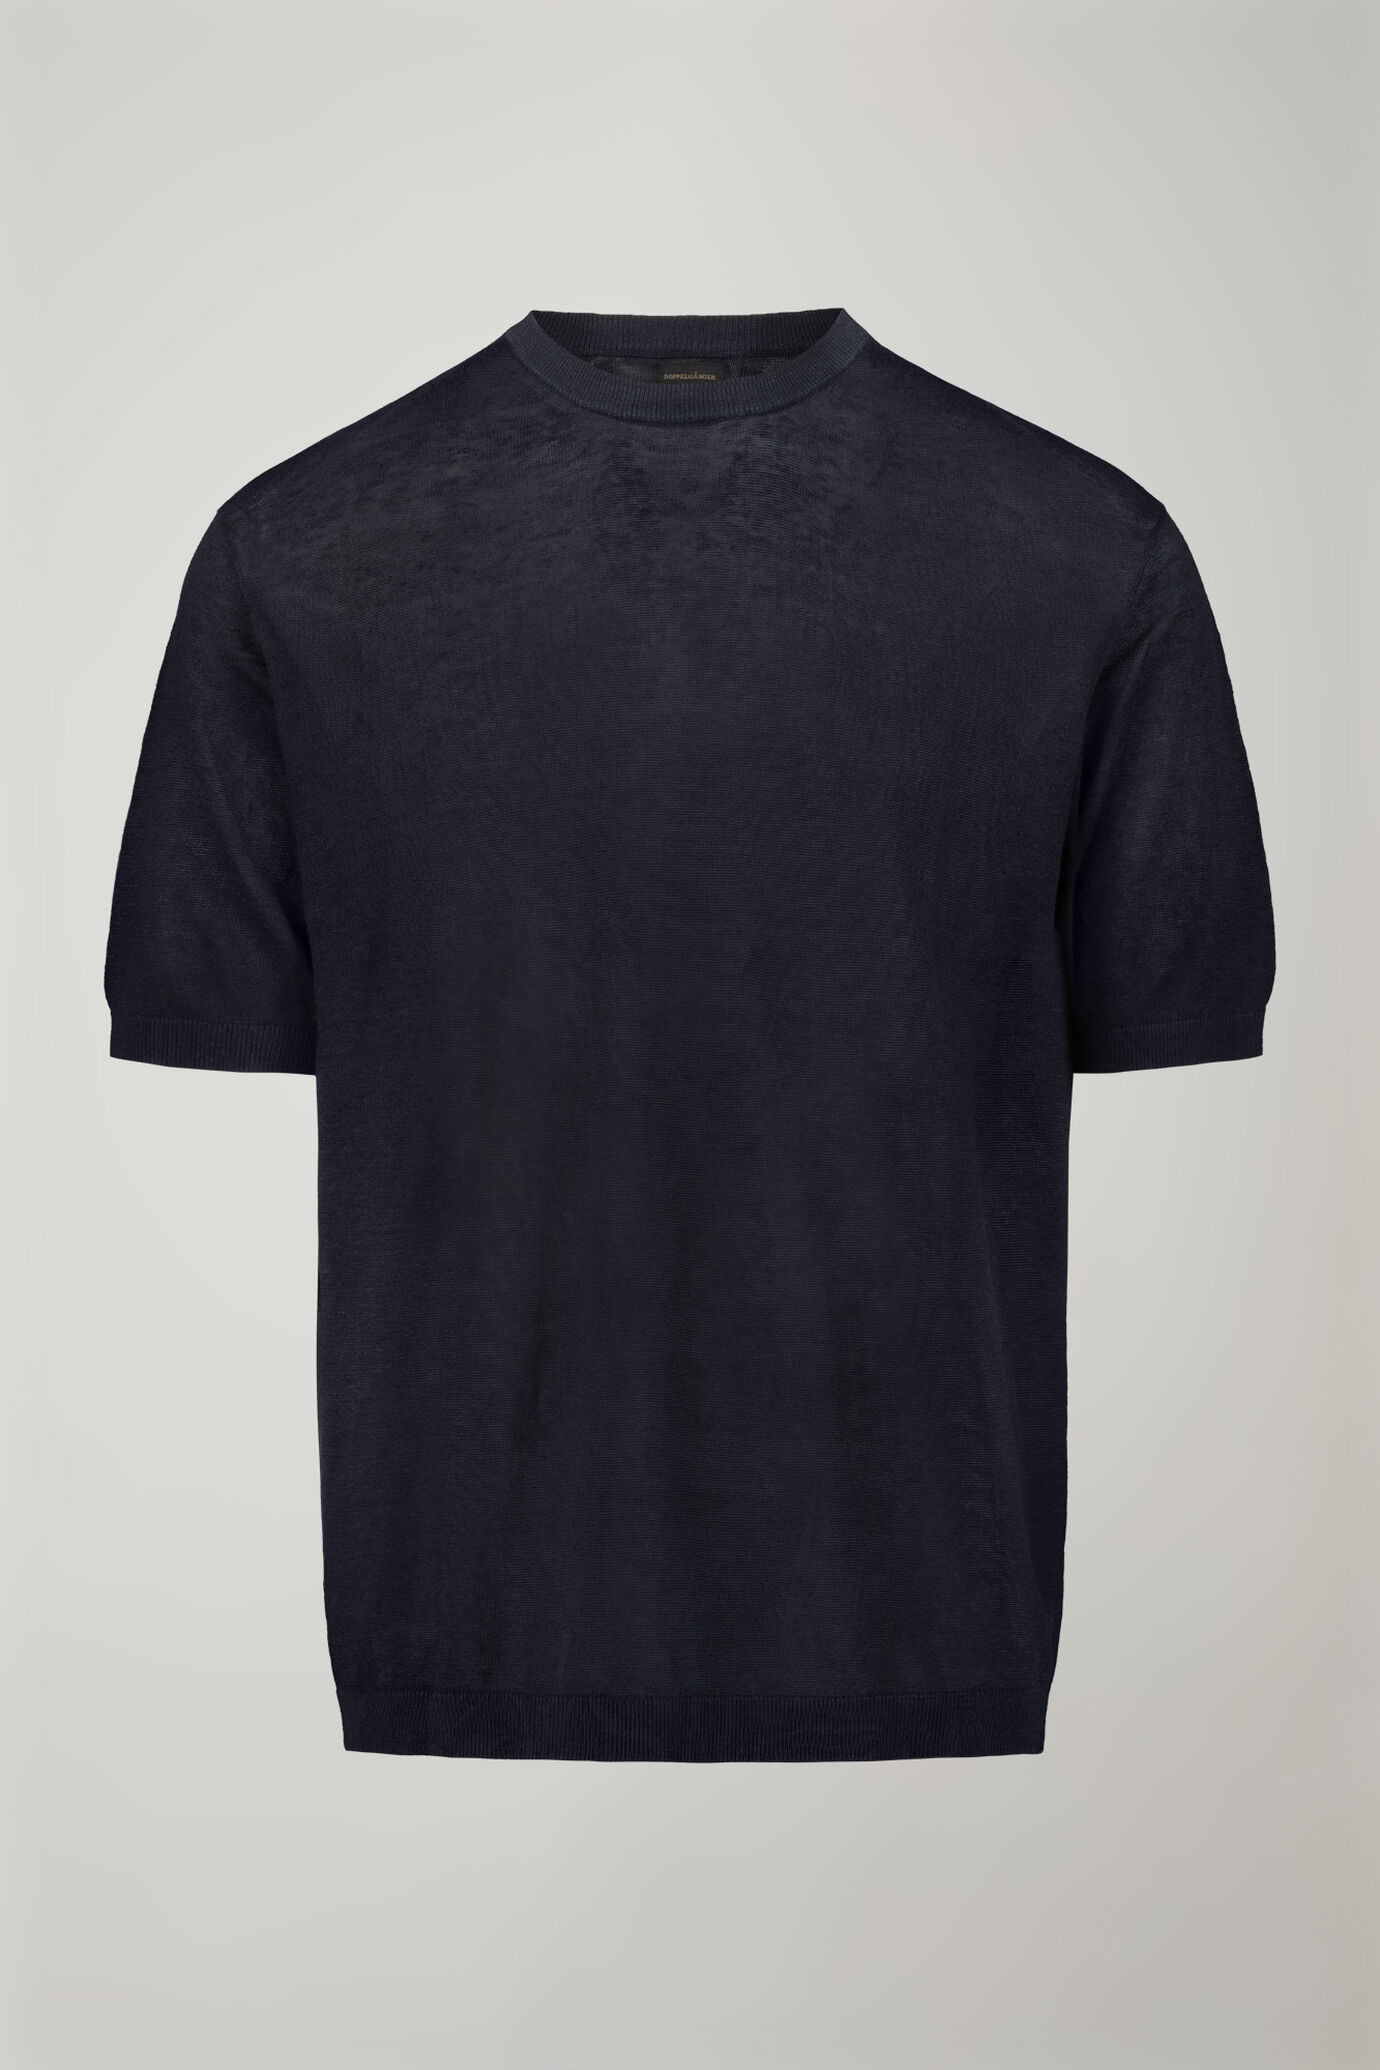 Men's knitted t-shirt 100% linen short-sleeved regular fit image number 4